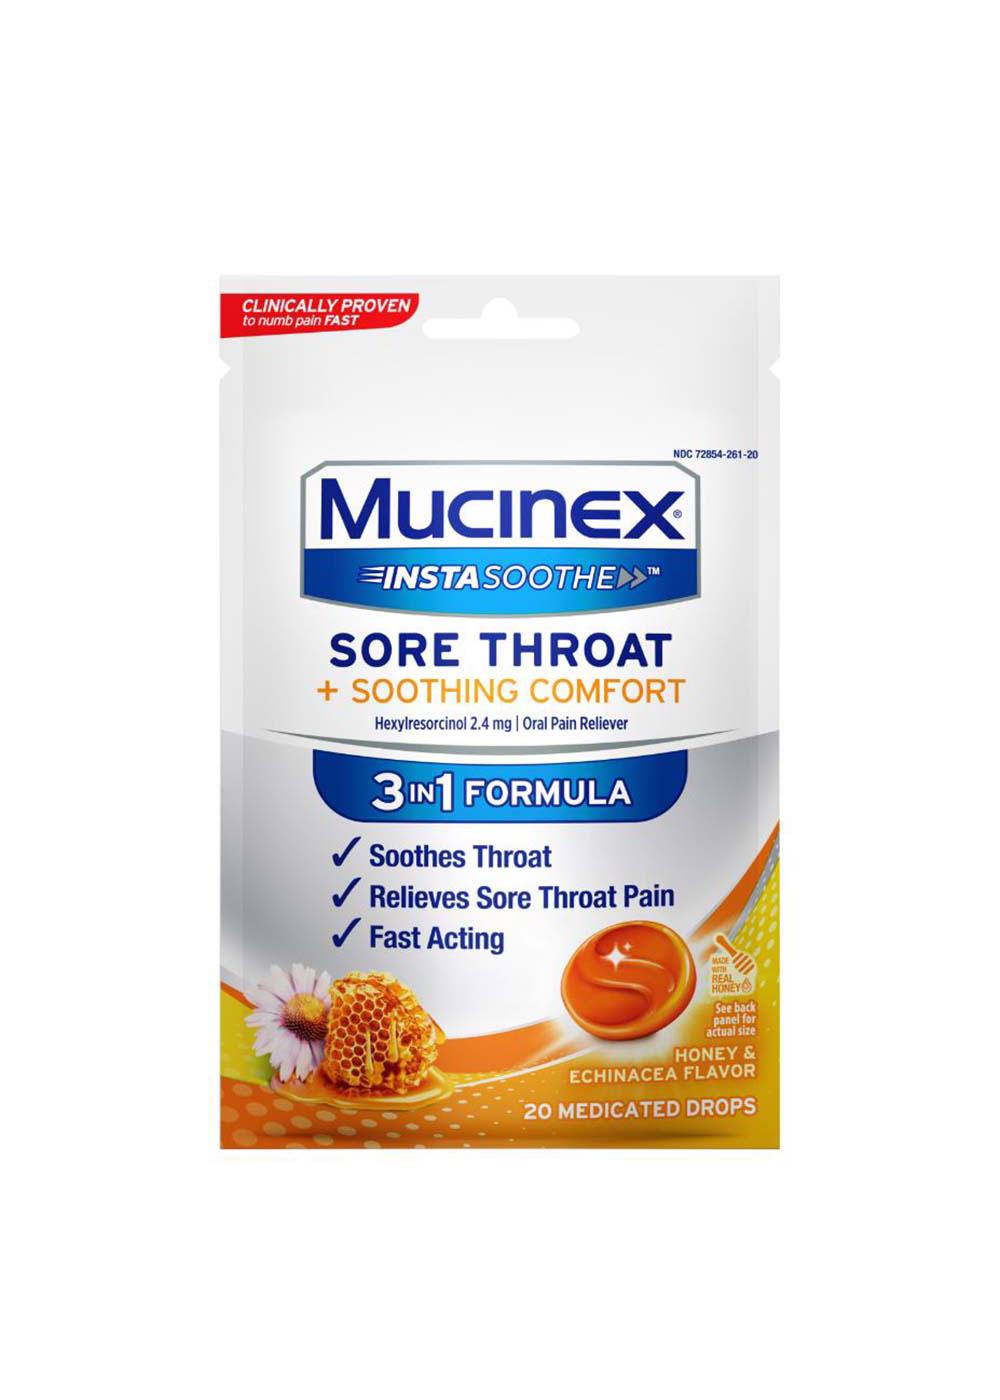 Mucinex Insta-Soothe Sore Throat + Soothing Comfort Drops - Honey & Echinacea ; image 1 of 2